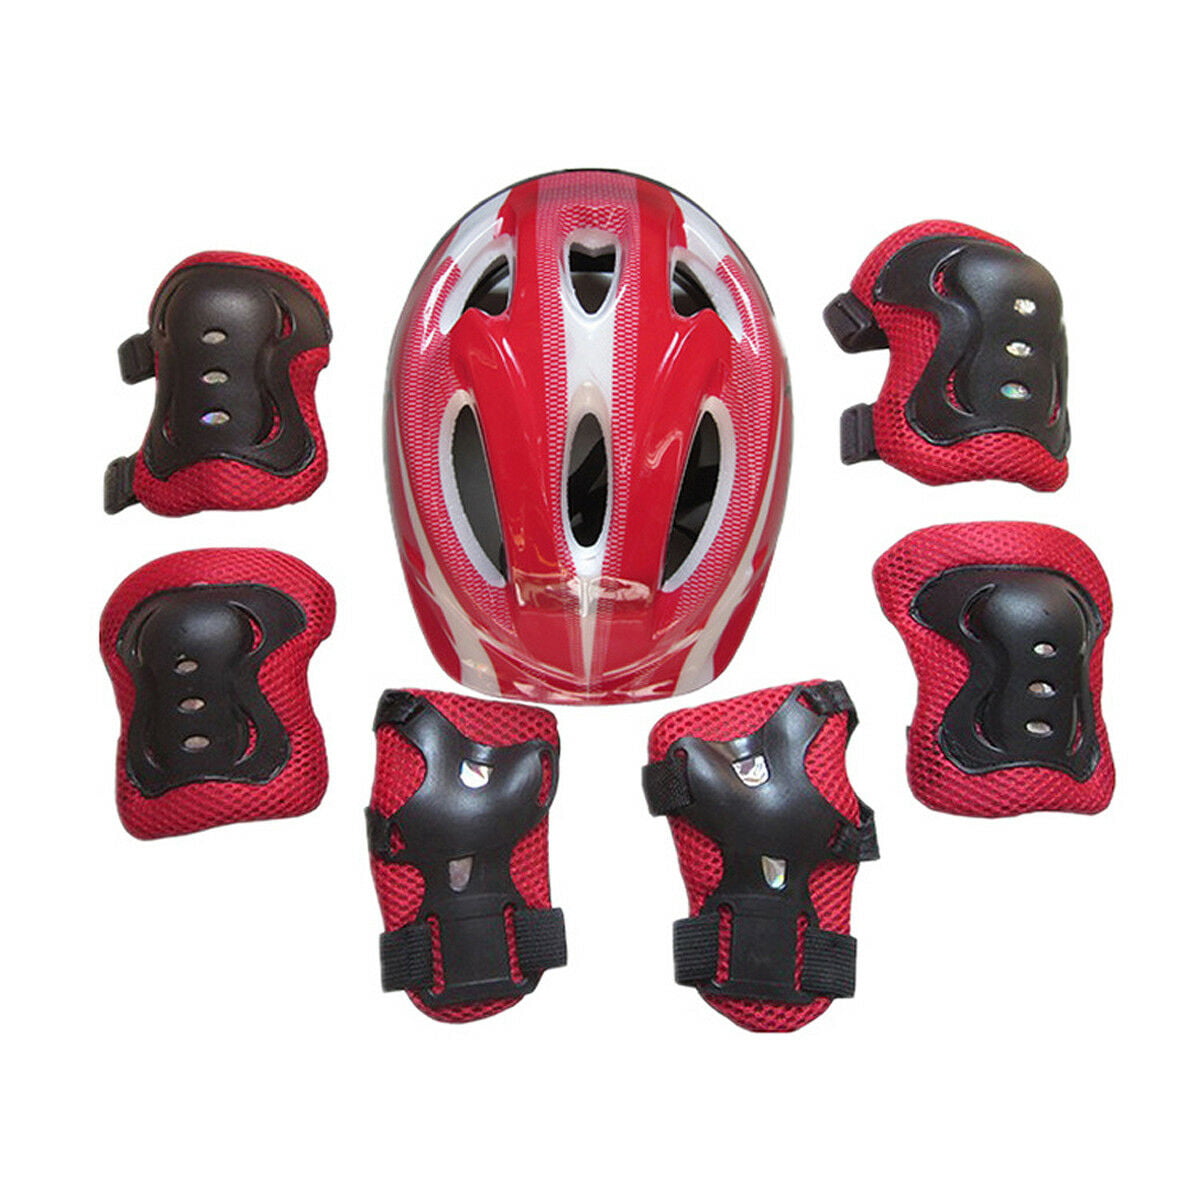 6998 Children 7PCS Skating Protective gear Kids Helmet+Knee/Elbow/Wrist Pads Set 